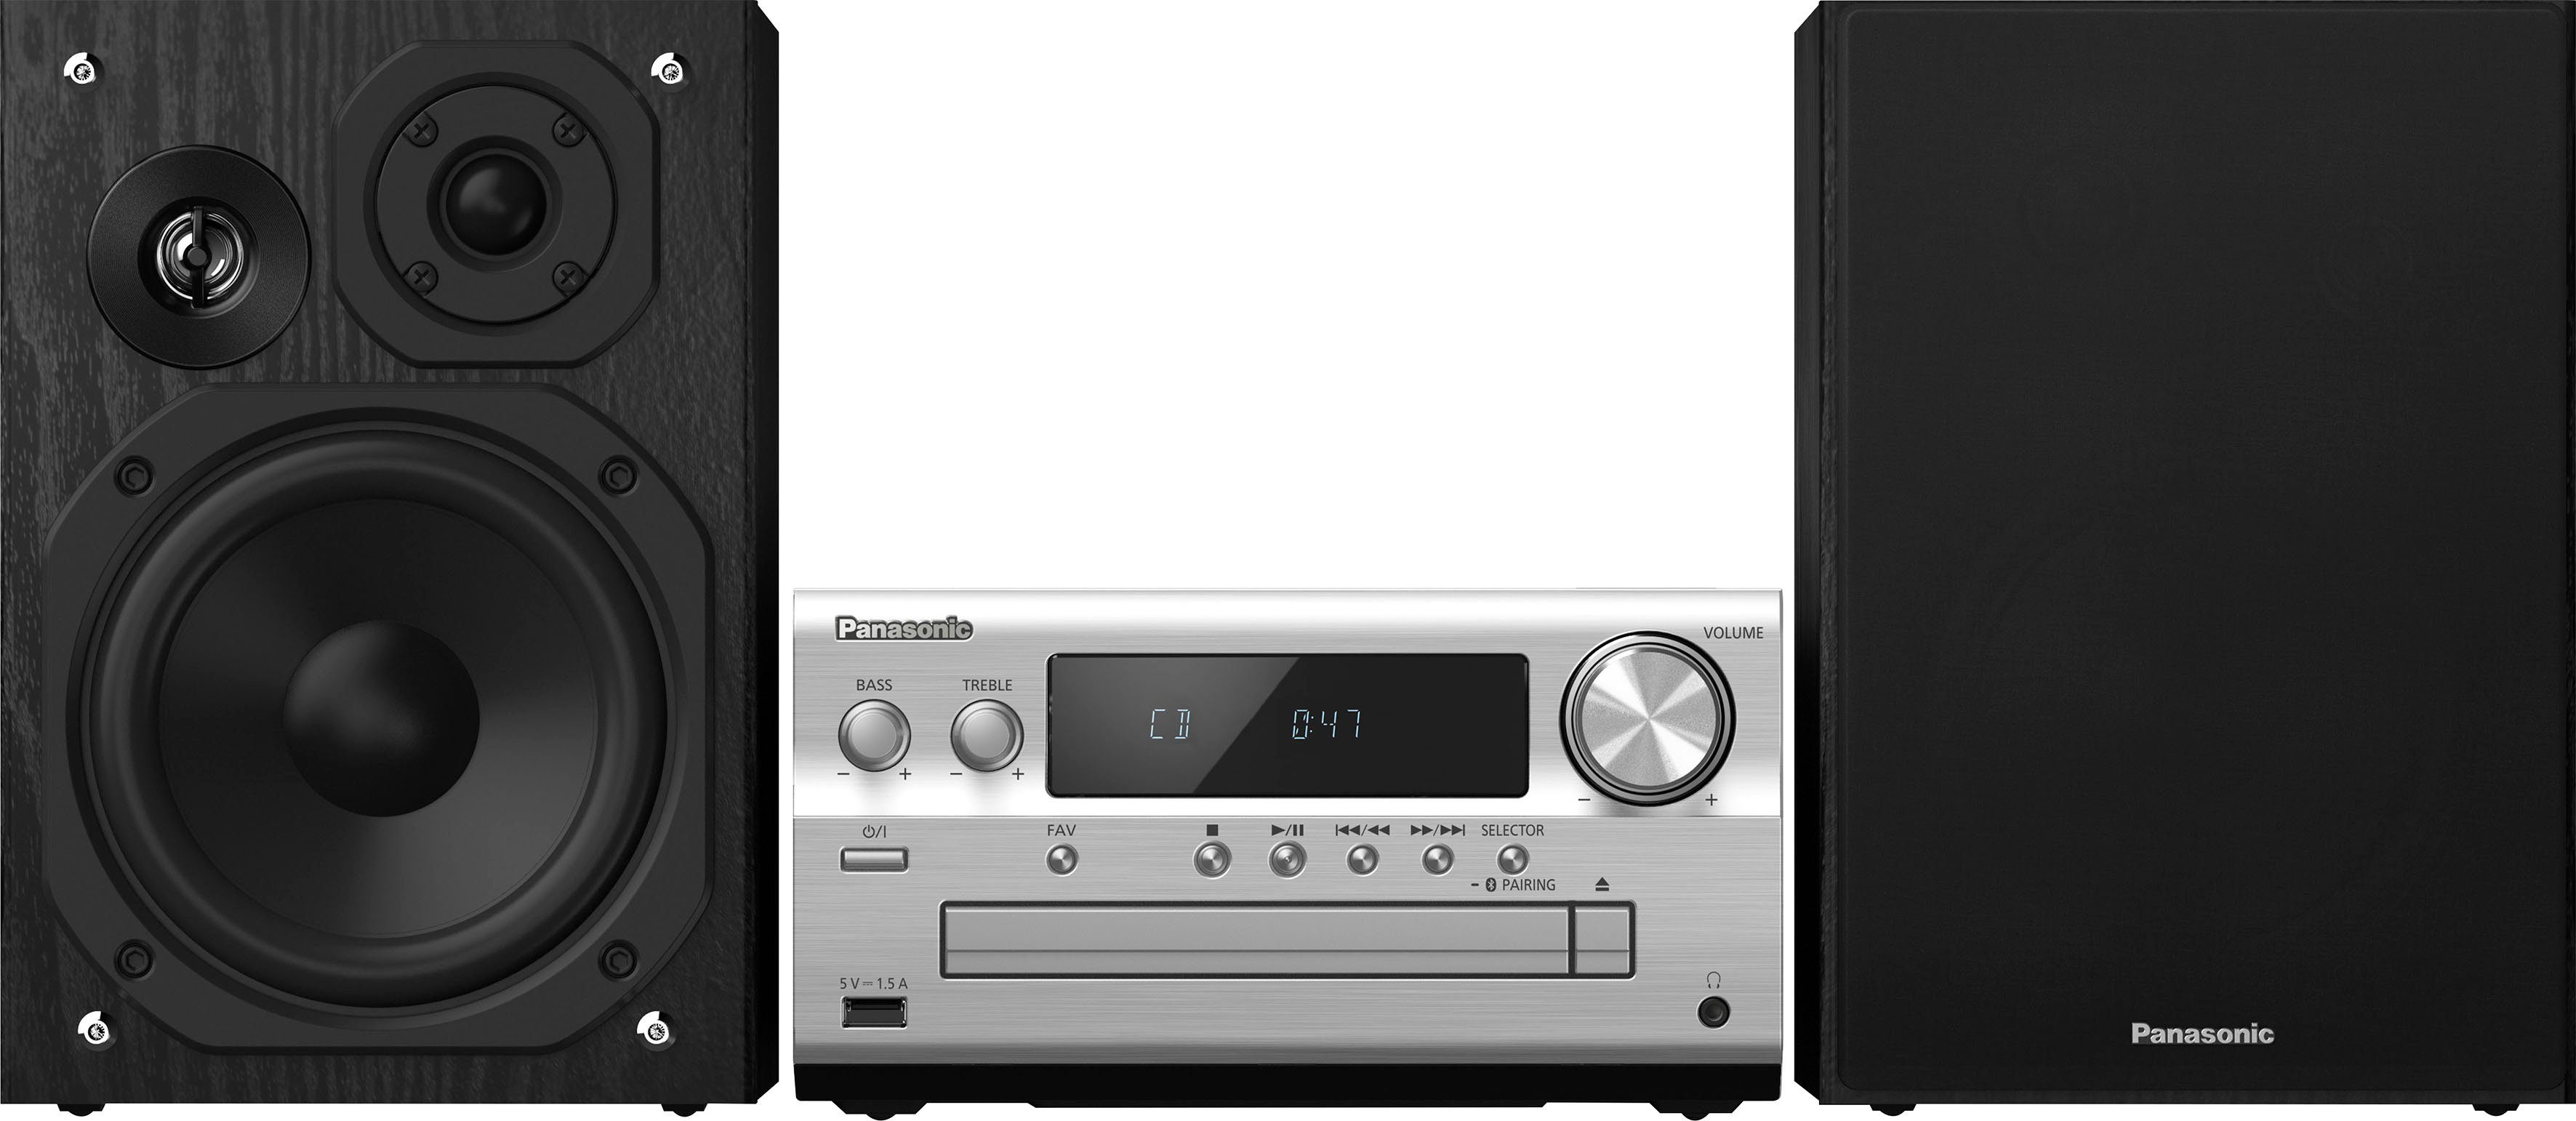 Radio, Airplay USB-Audiowiedergabe), 2 Premium UKW Micro- WLAN, Kompaktanlage (Bluetooth, über Streaming Hi-Res und Audio, SC-PMX802E Panasonic Chromecast